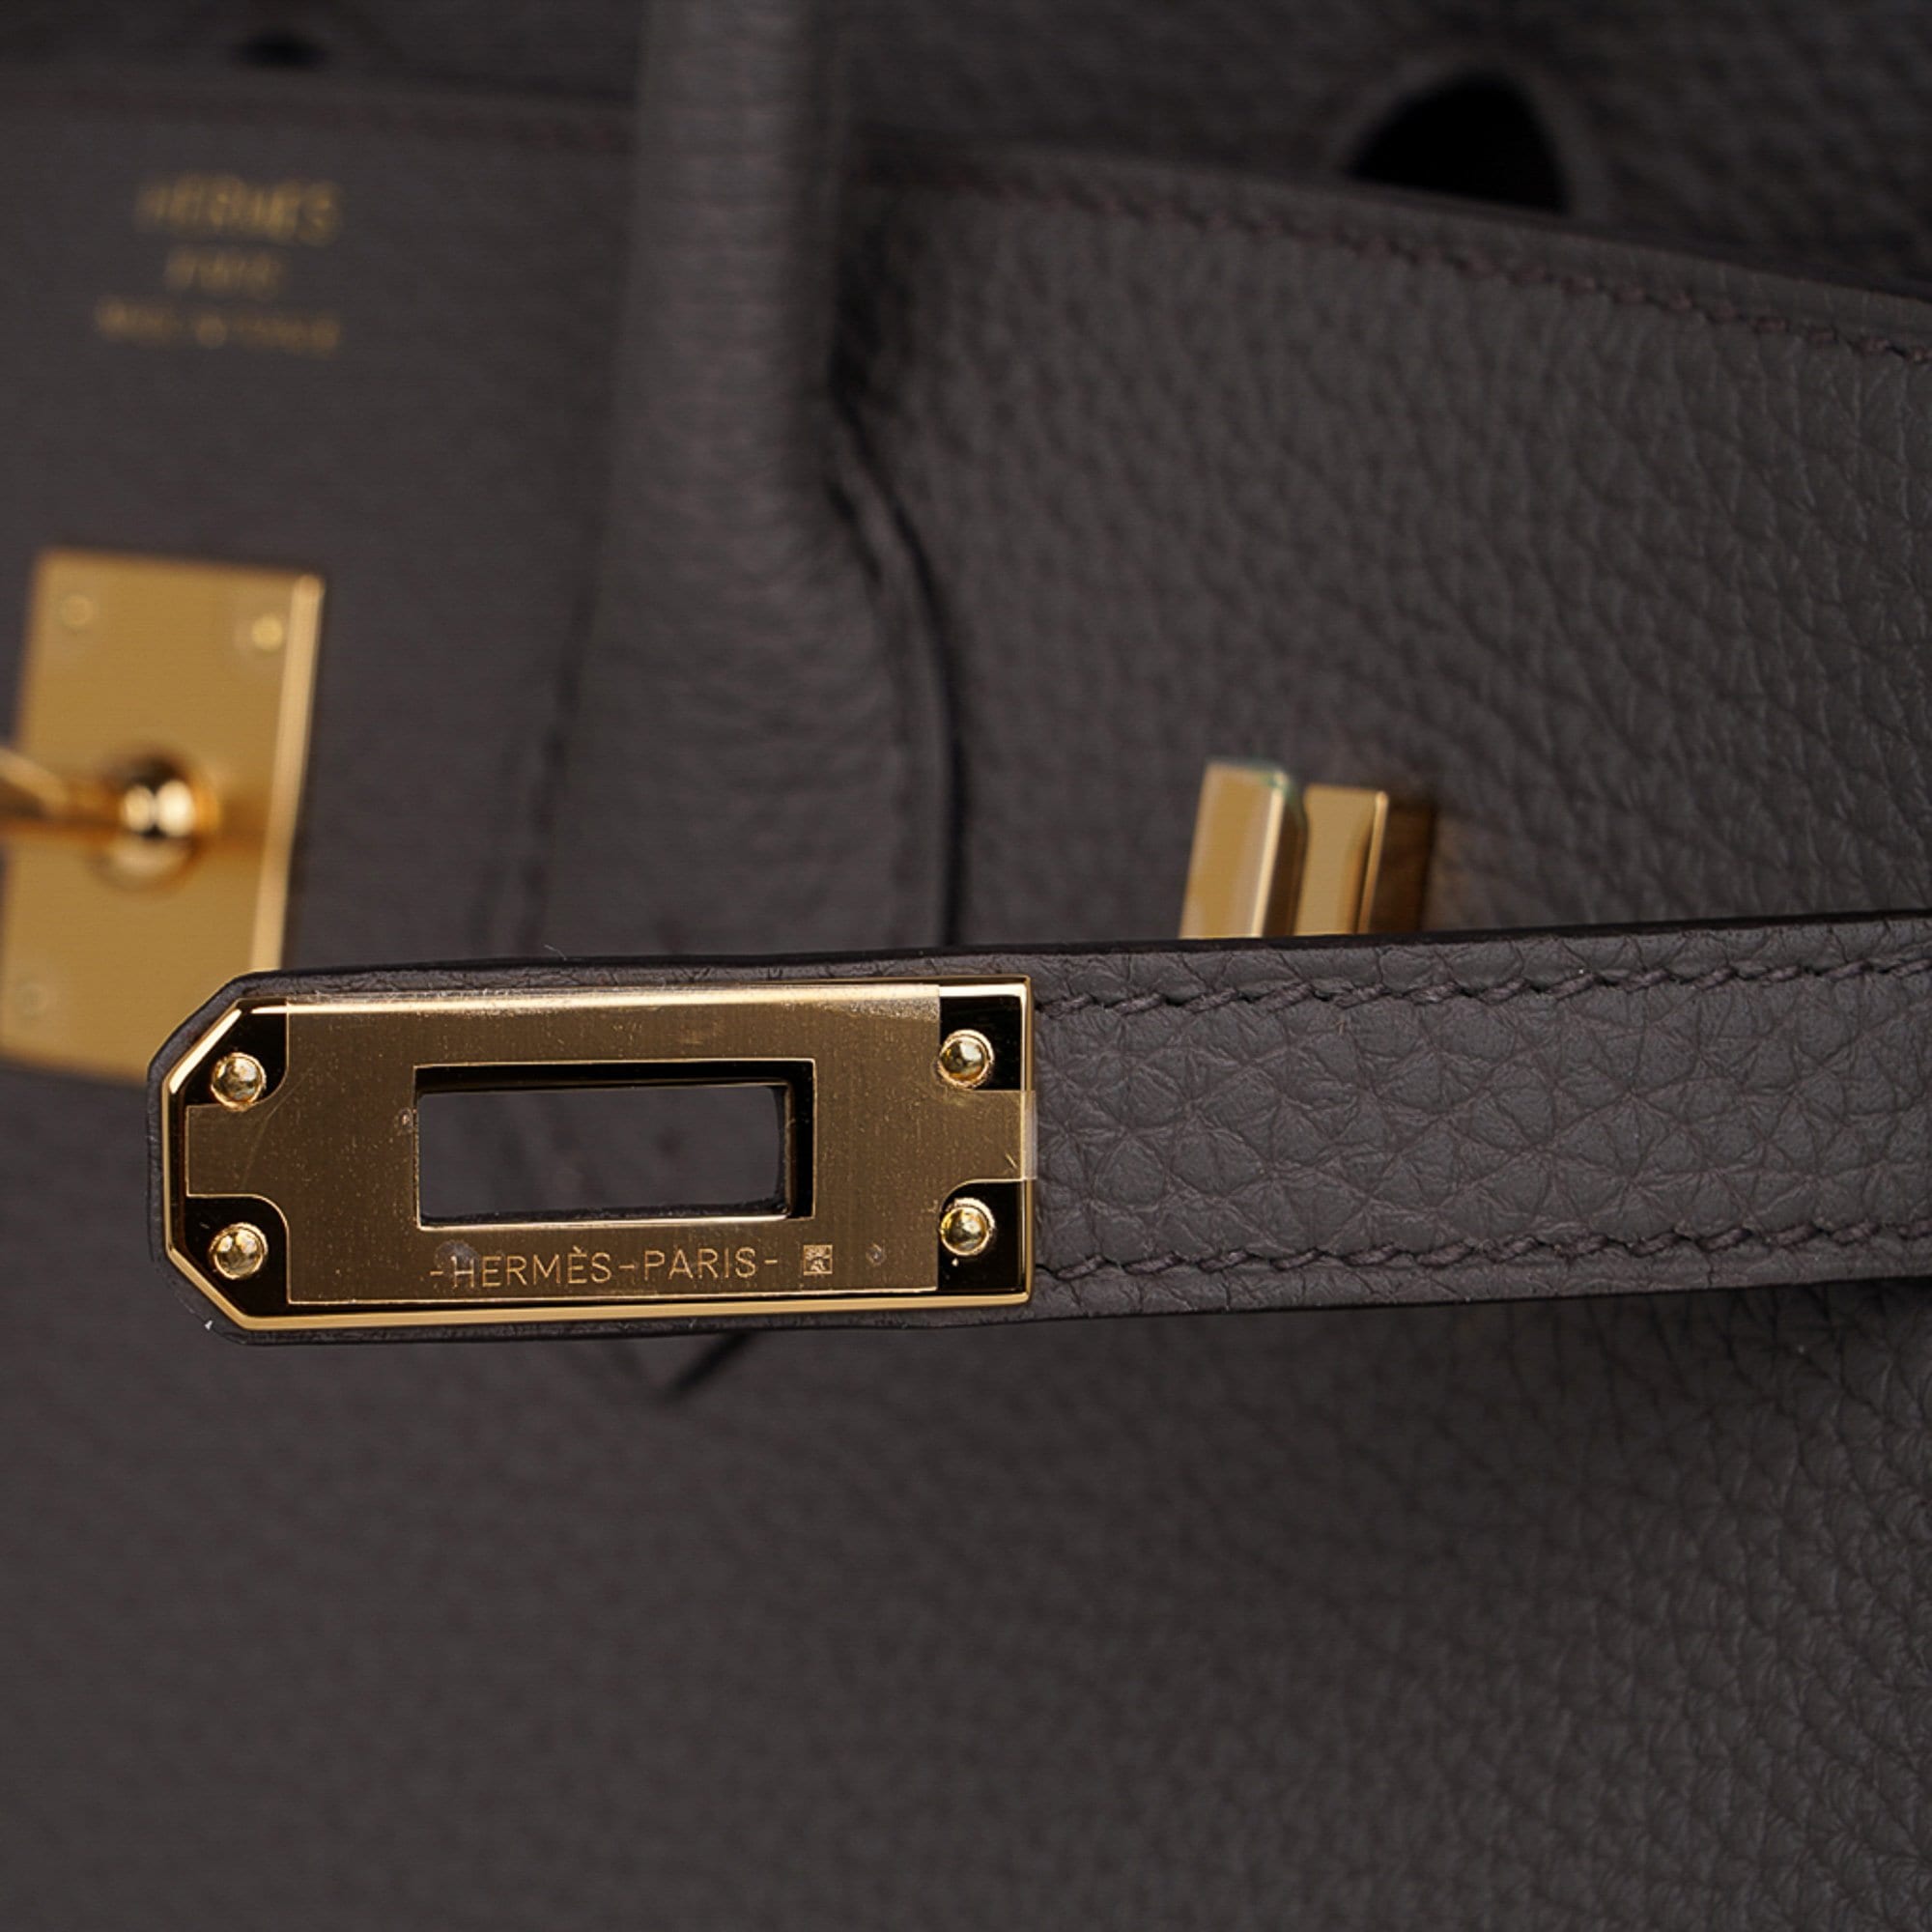 Hermès - Authenticated Birkin 25 Handbag - Leather Orange Plain for Women, Good Condition